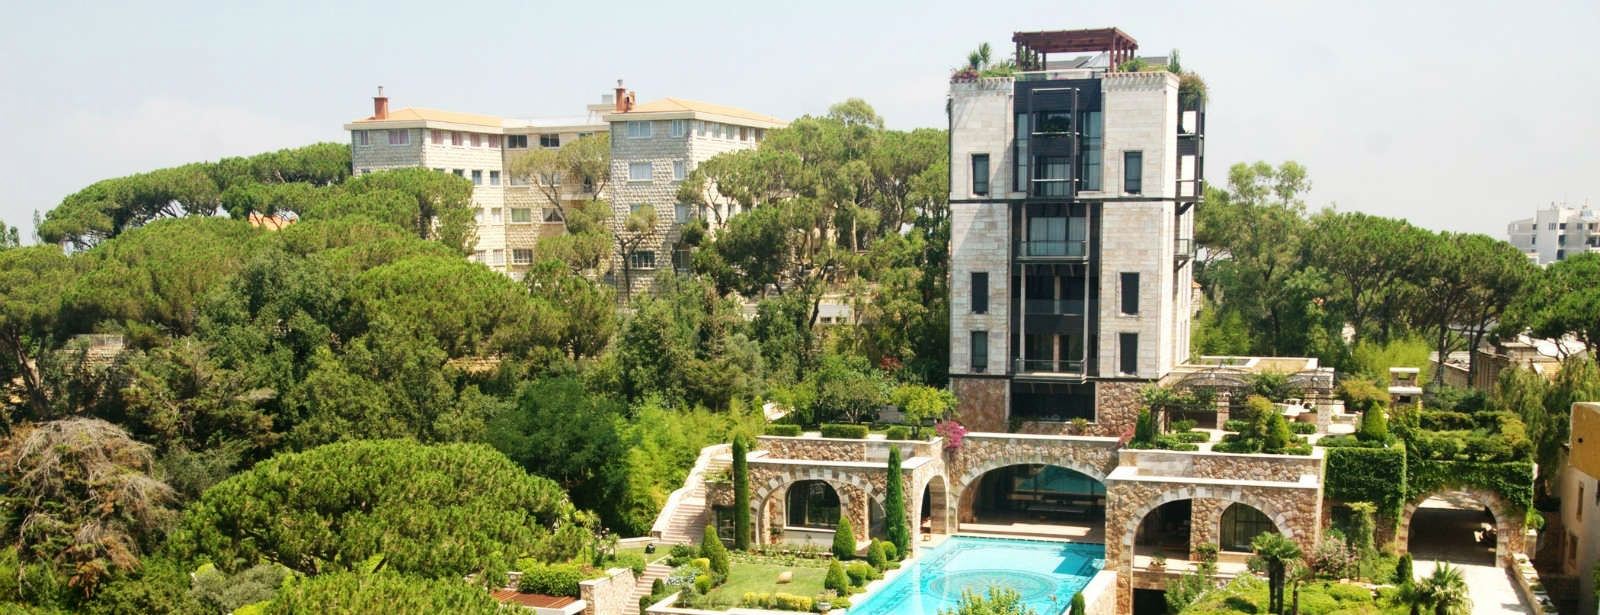 Grand Hills Hotel Spa Broumana Lebanon